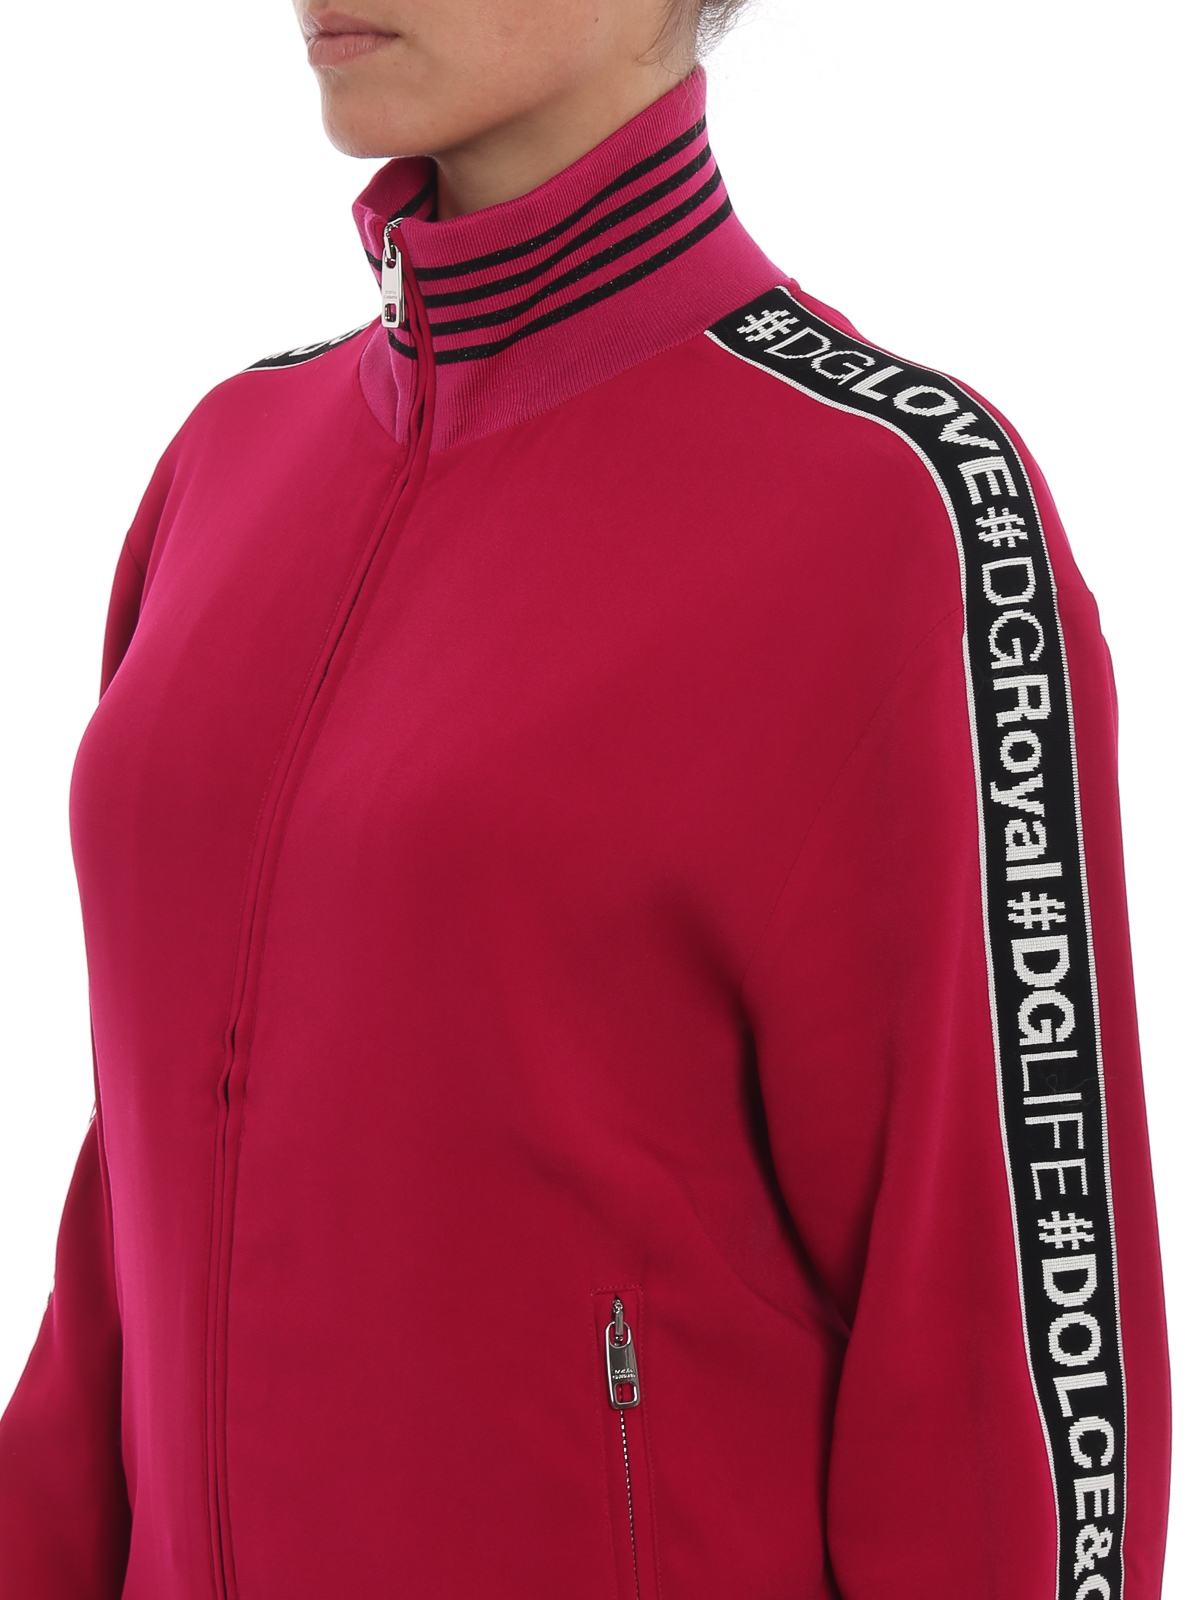 Profetie spade Ophef Sweatshirts & Sweaters Dolce & Gabbana - #DG Millennials zip sweat jacket -  F9D05TG7QHQF4079